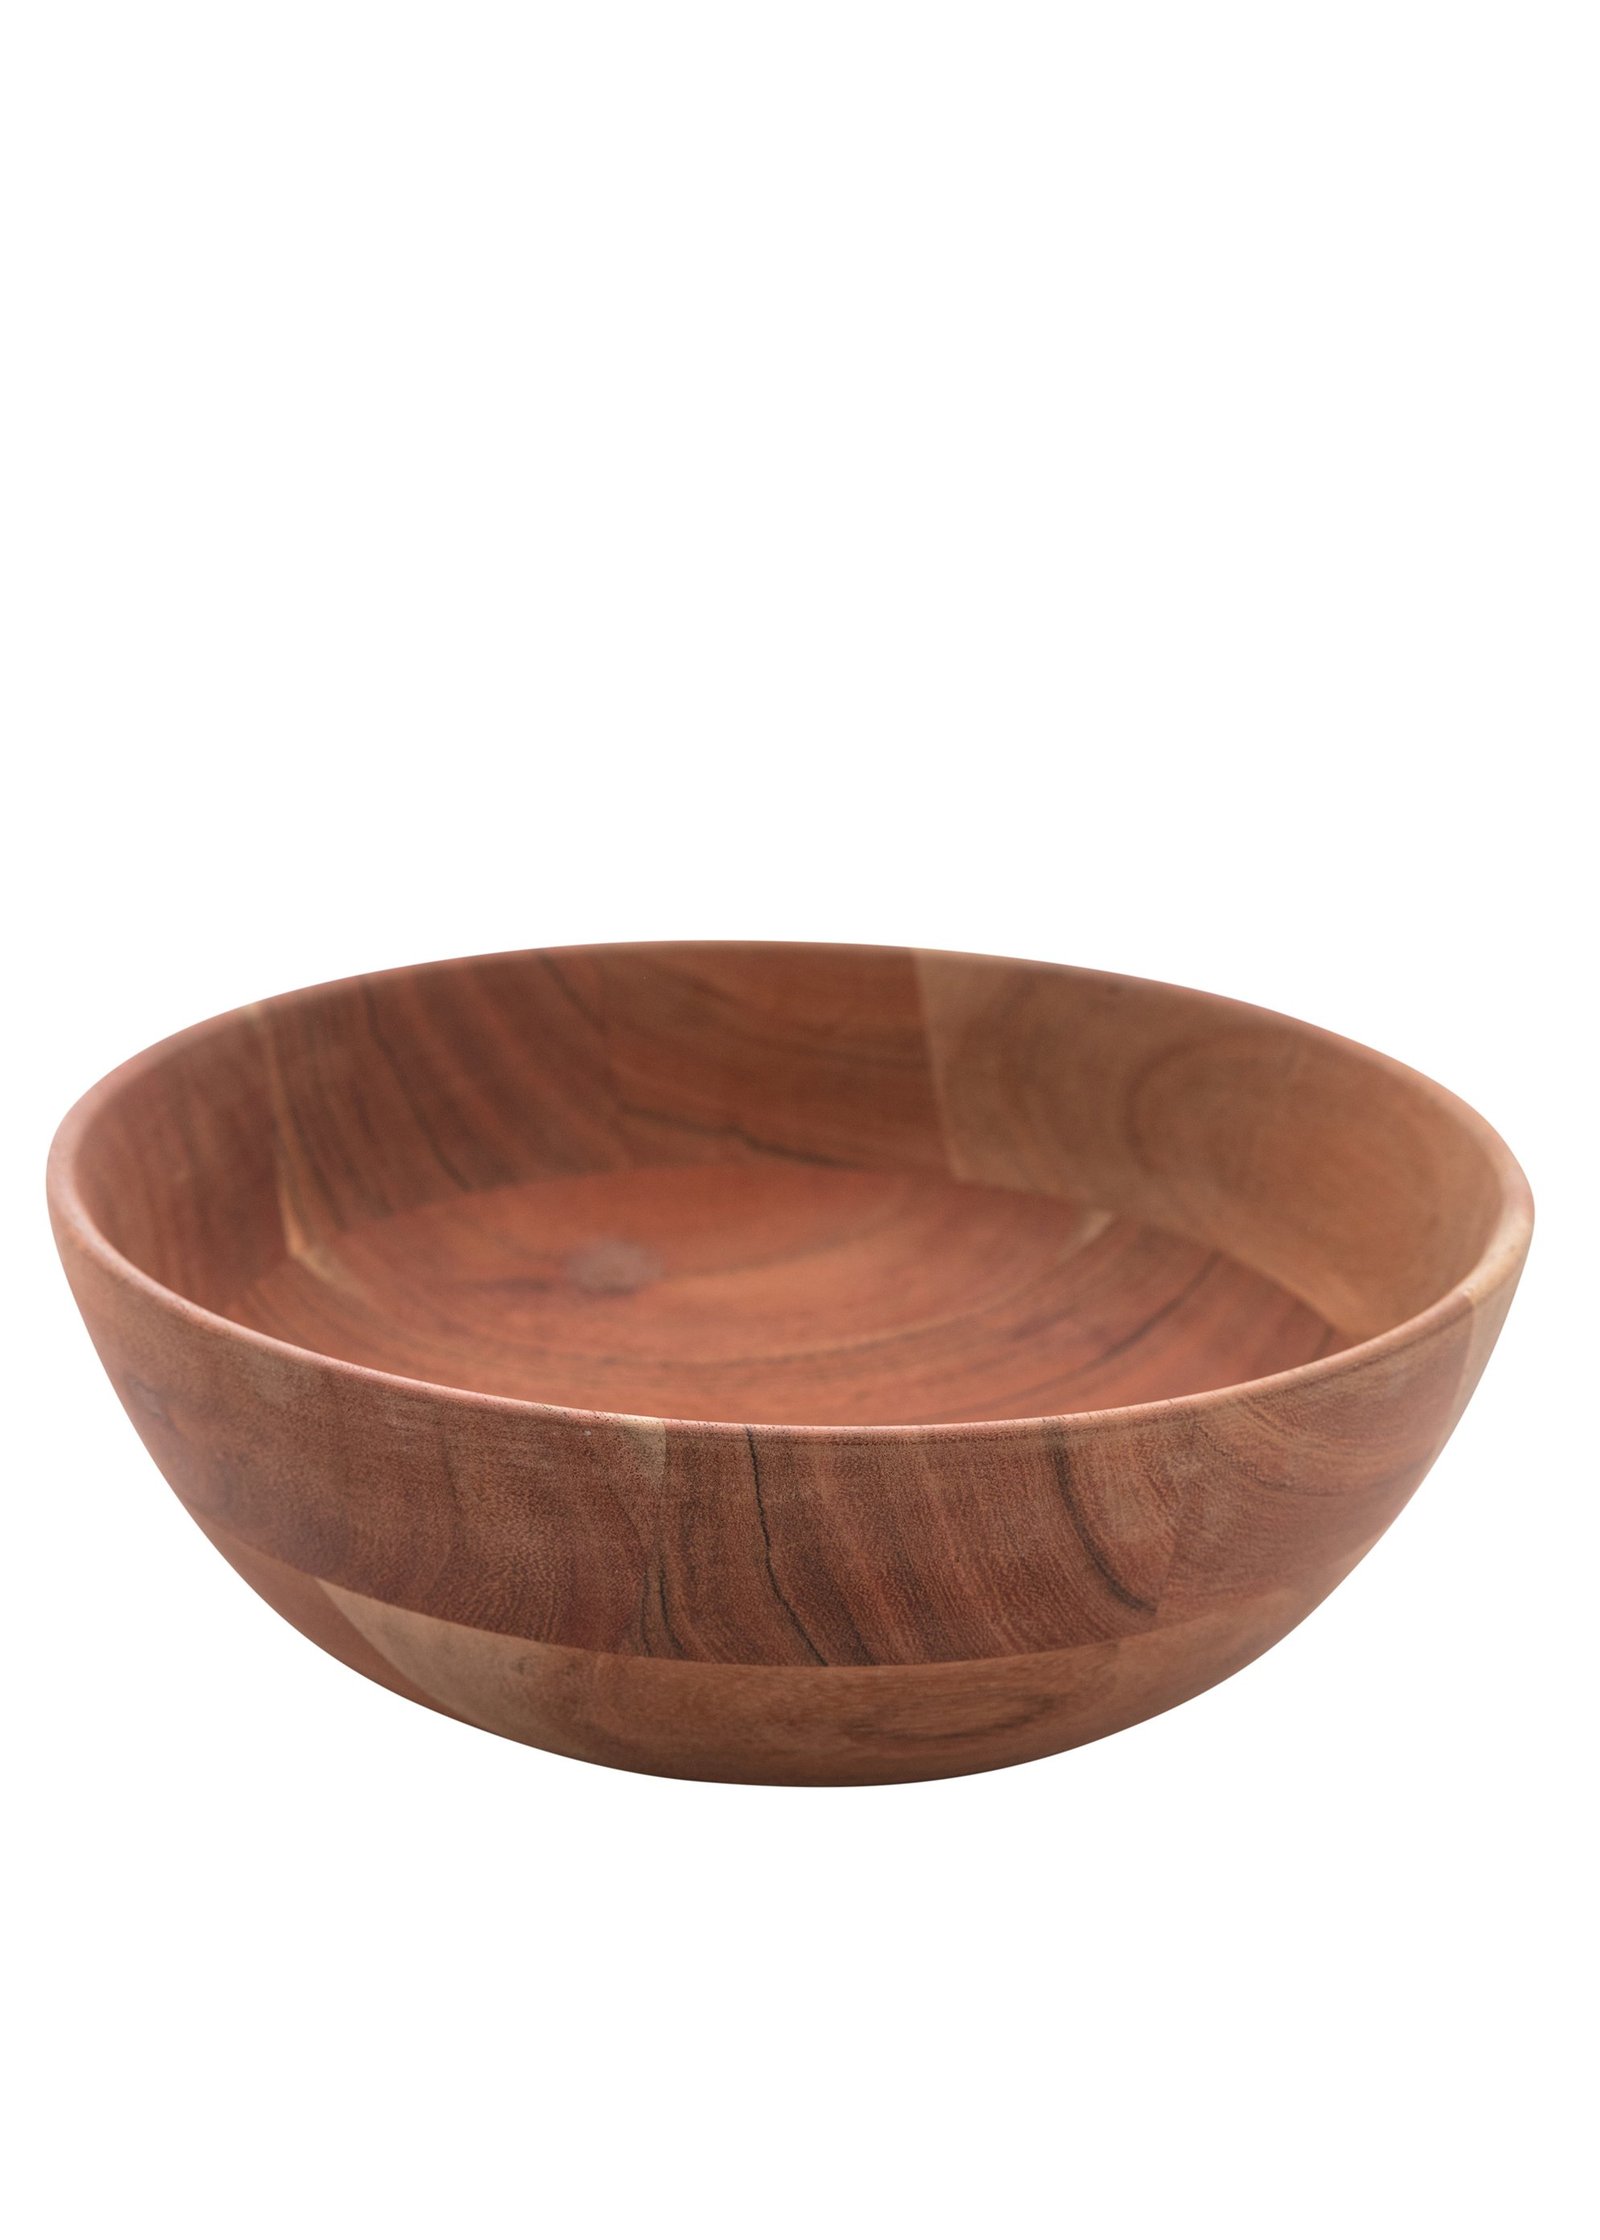 Wood salad bowl Image 1